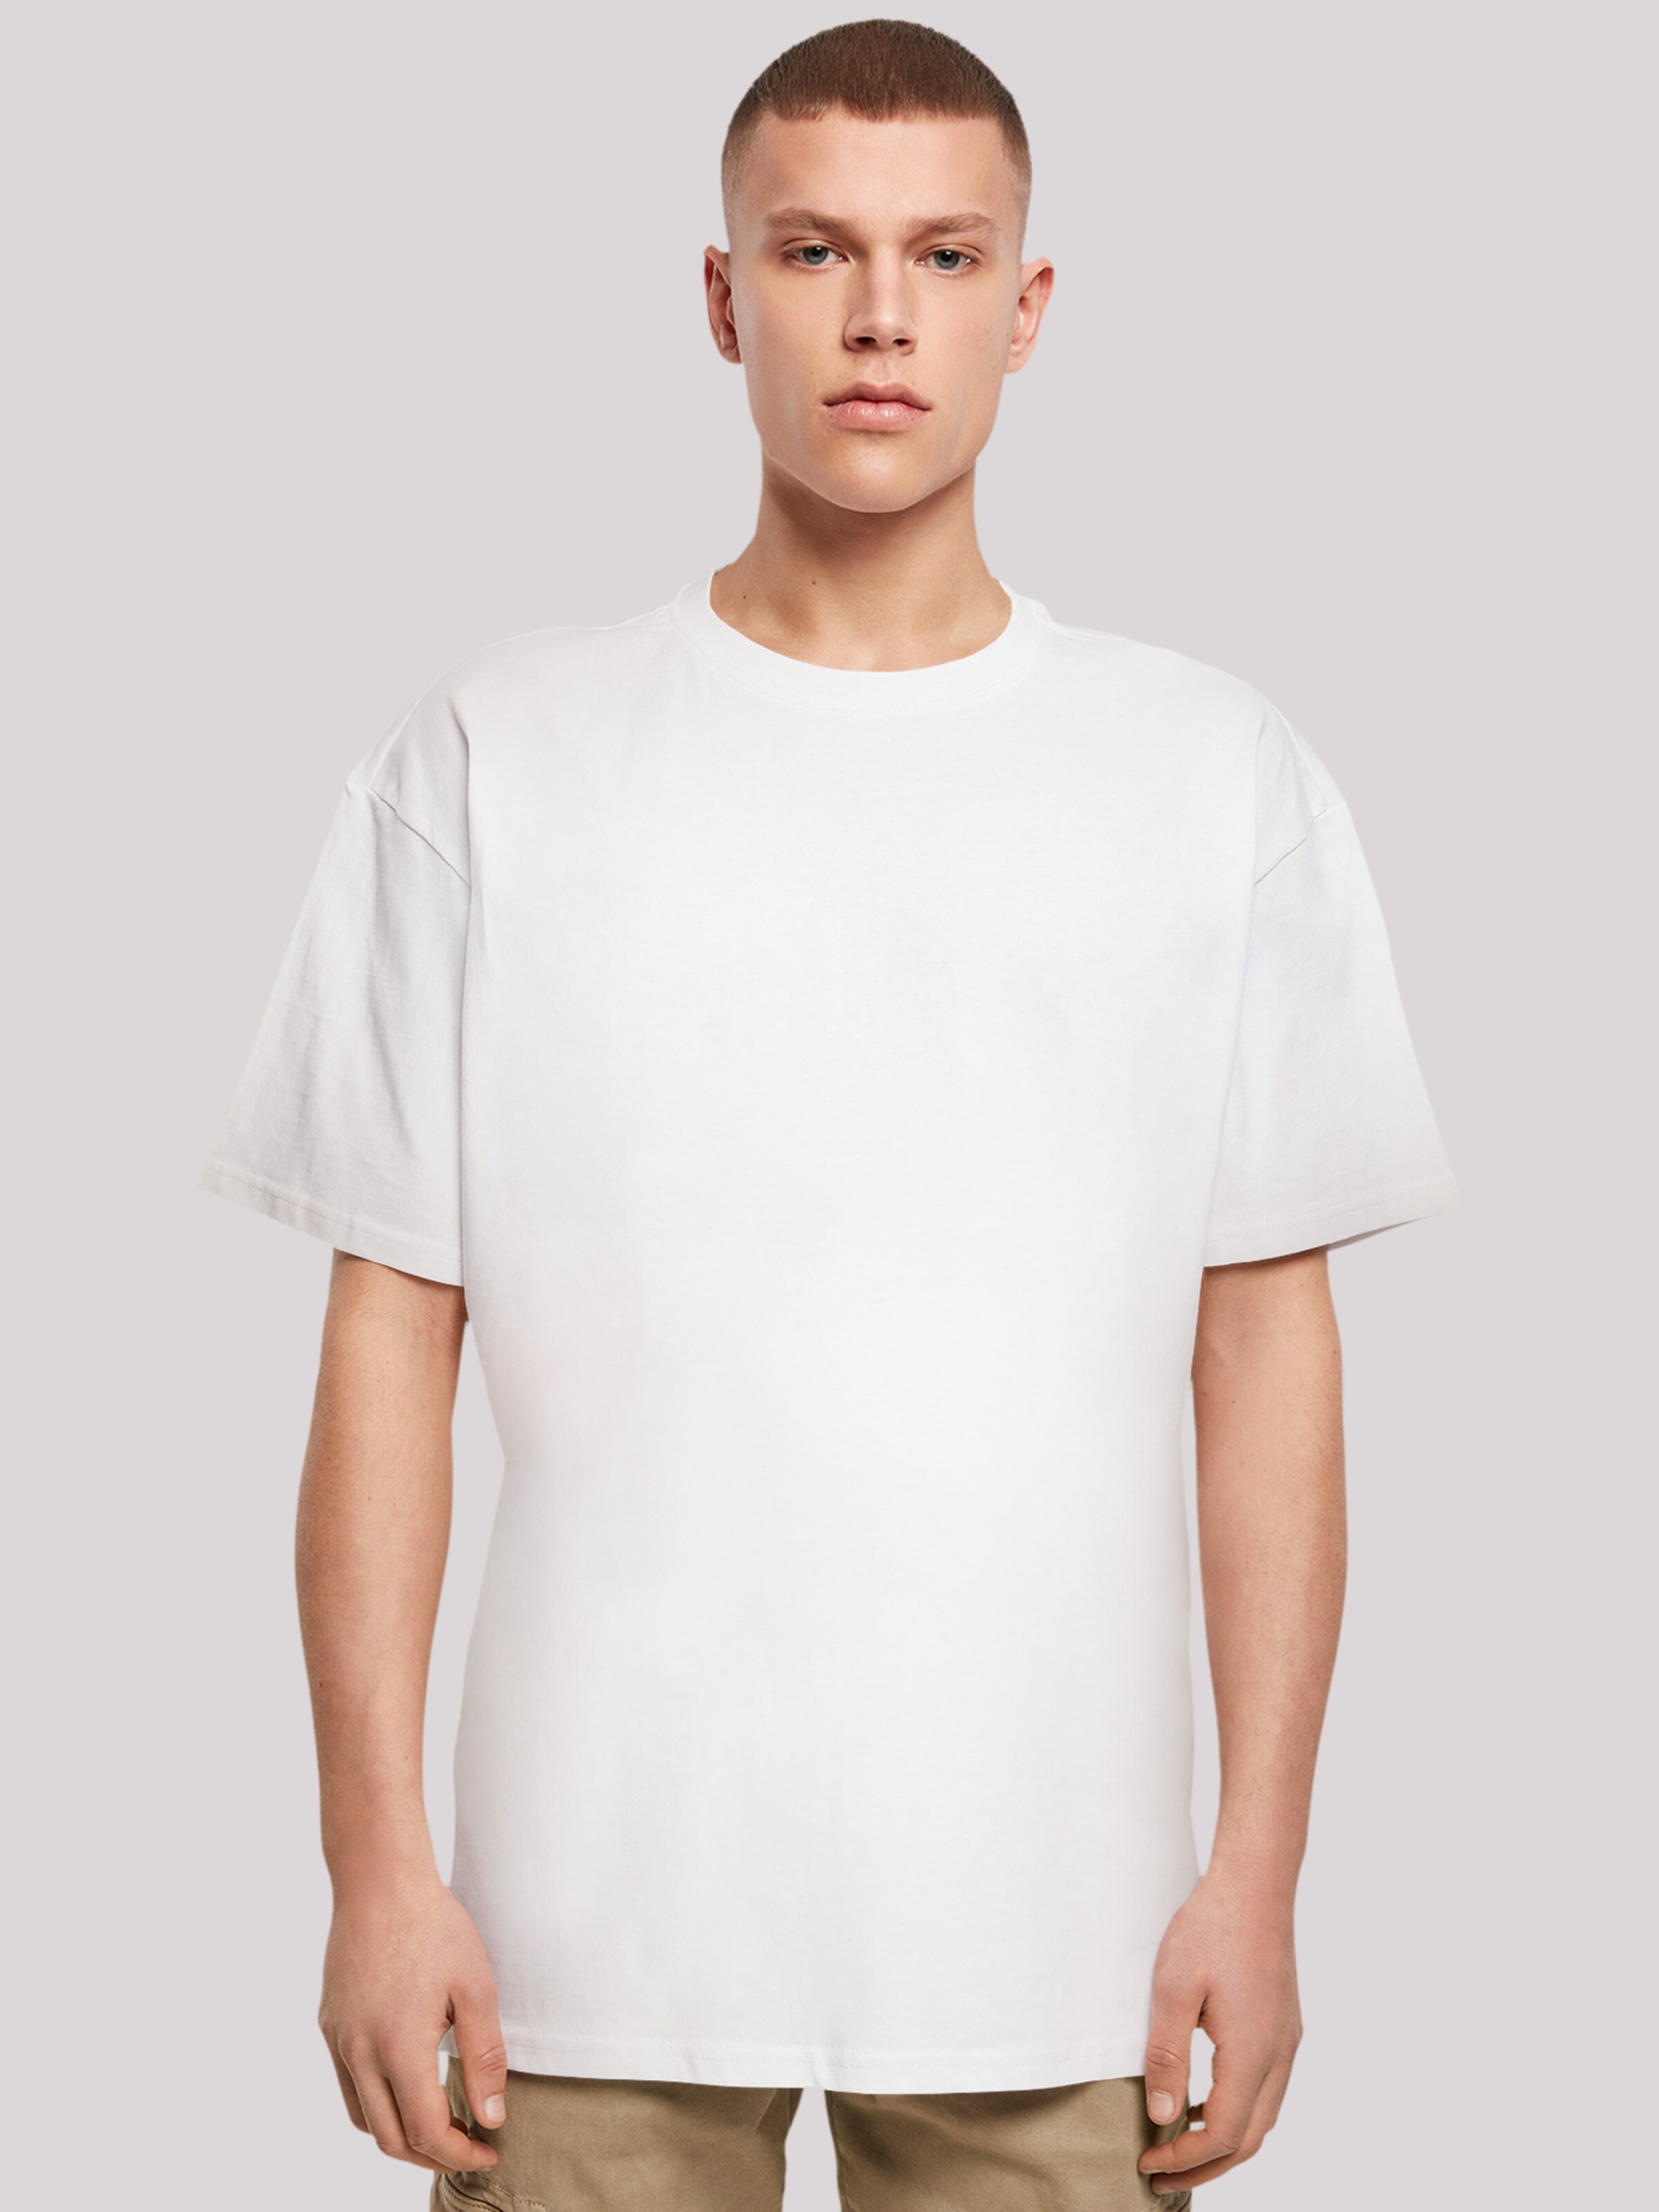 F4NT4STIC Shirt \'Bora Bora Leewards Island\' in White | ABOUT YOU